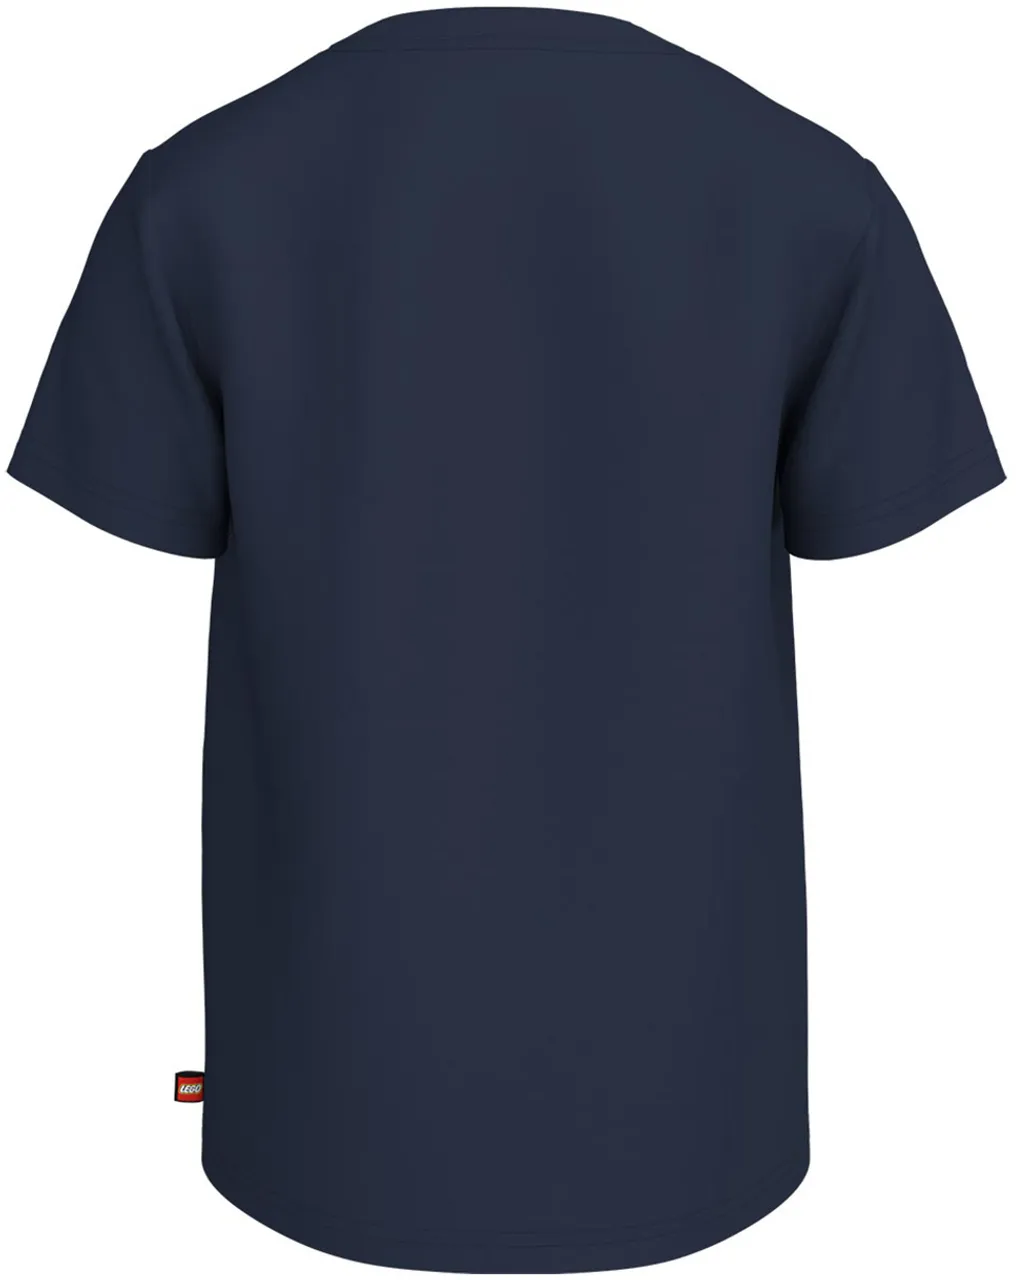 T-Shirt LWTAYLOR 108 in dark navy